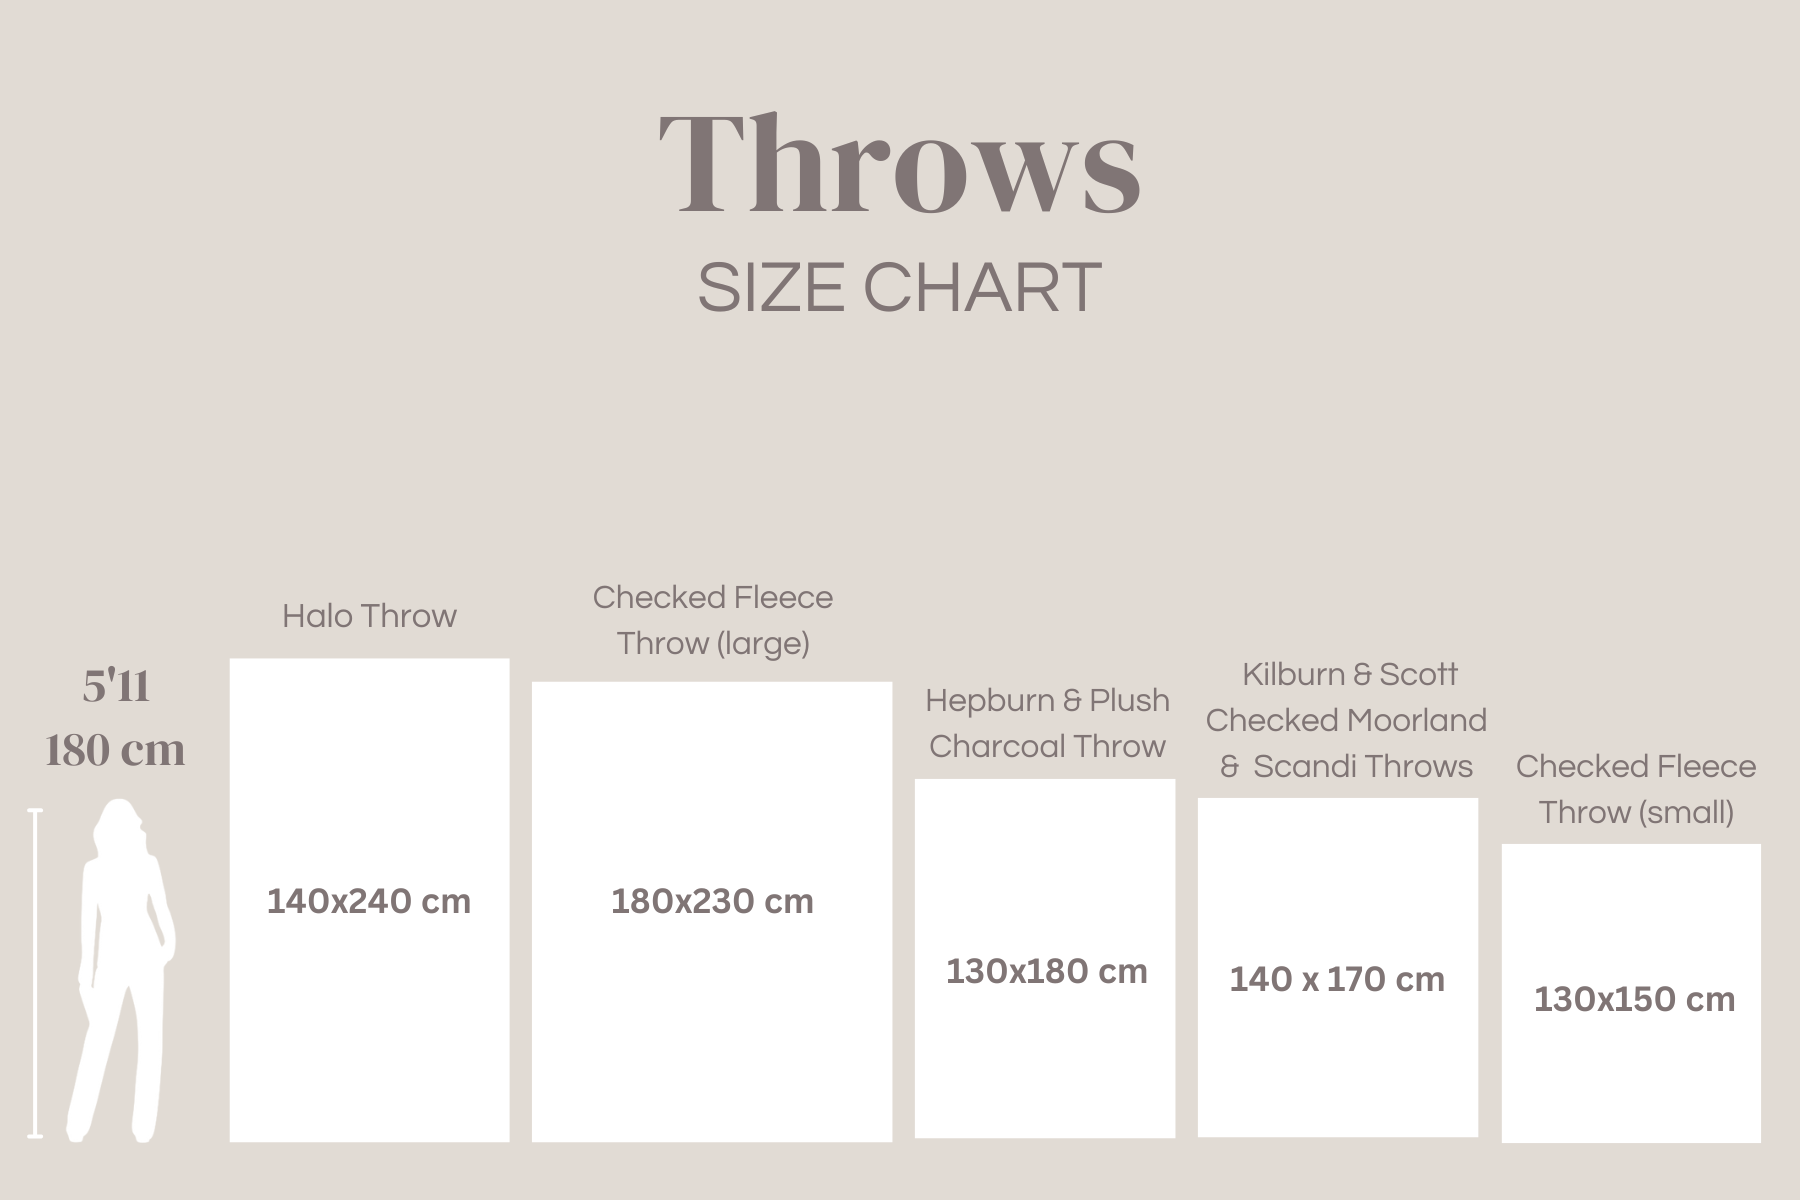 Shabby Throws Size Chart: Halo Throw 140x240 cm, Checked Fleece Throw (large) 180x230 cm, Hepburn & Plush Charcoal Throw 130x180 cm,  Kilburn & Scott Checked Moorland &  Scandi Throws 140 x 170 cm, Checked Fleece Throw (small) 130x150 cm.